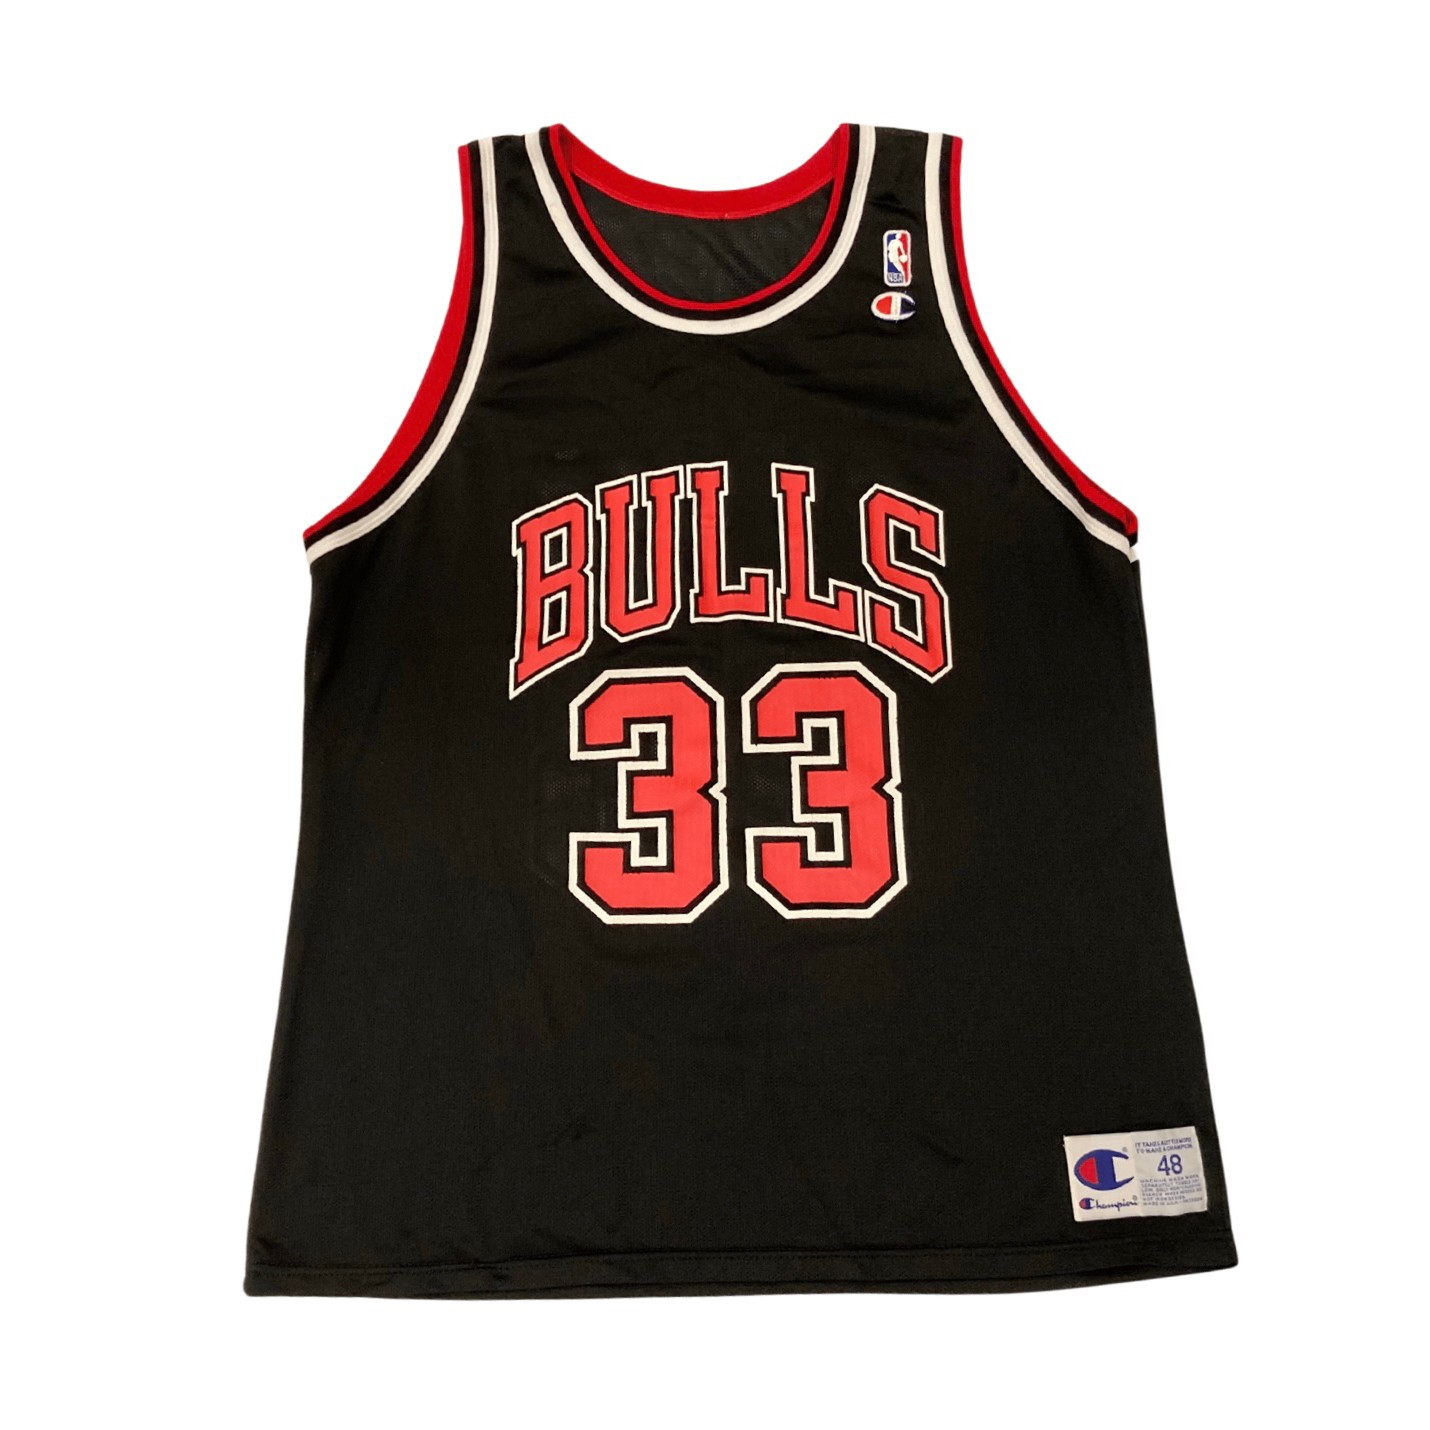 90s NBA CHIAGO BULLS 